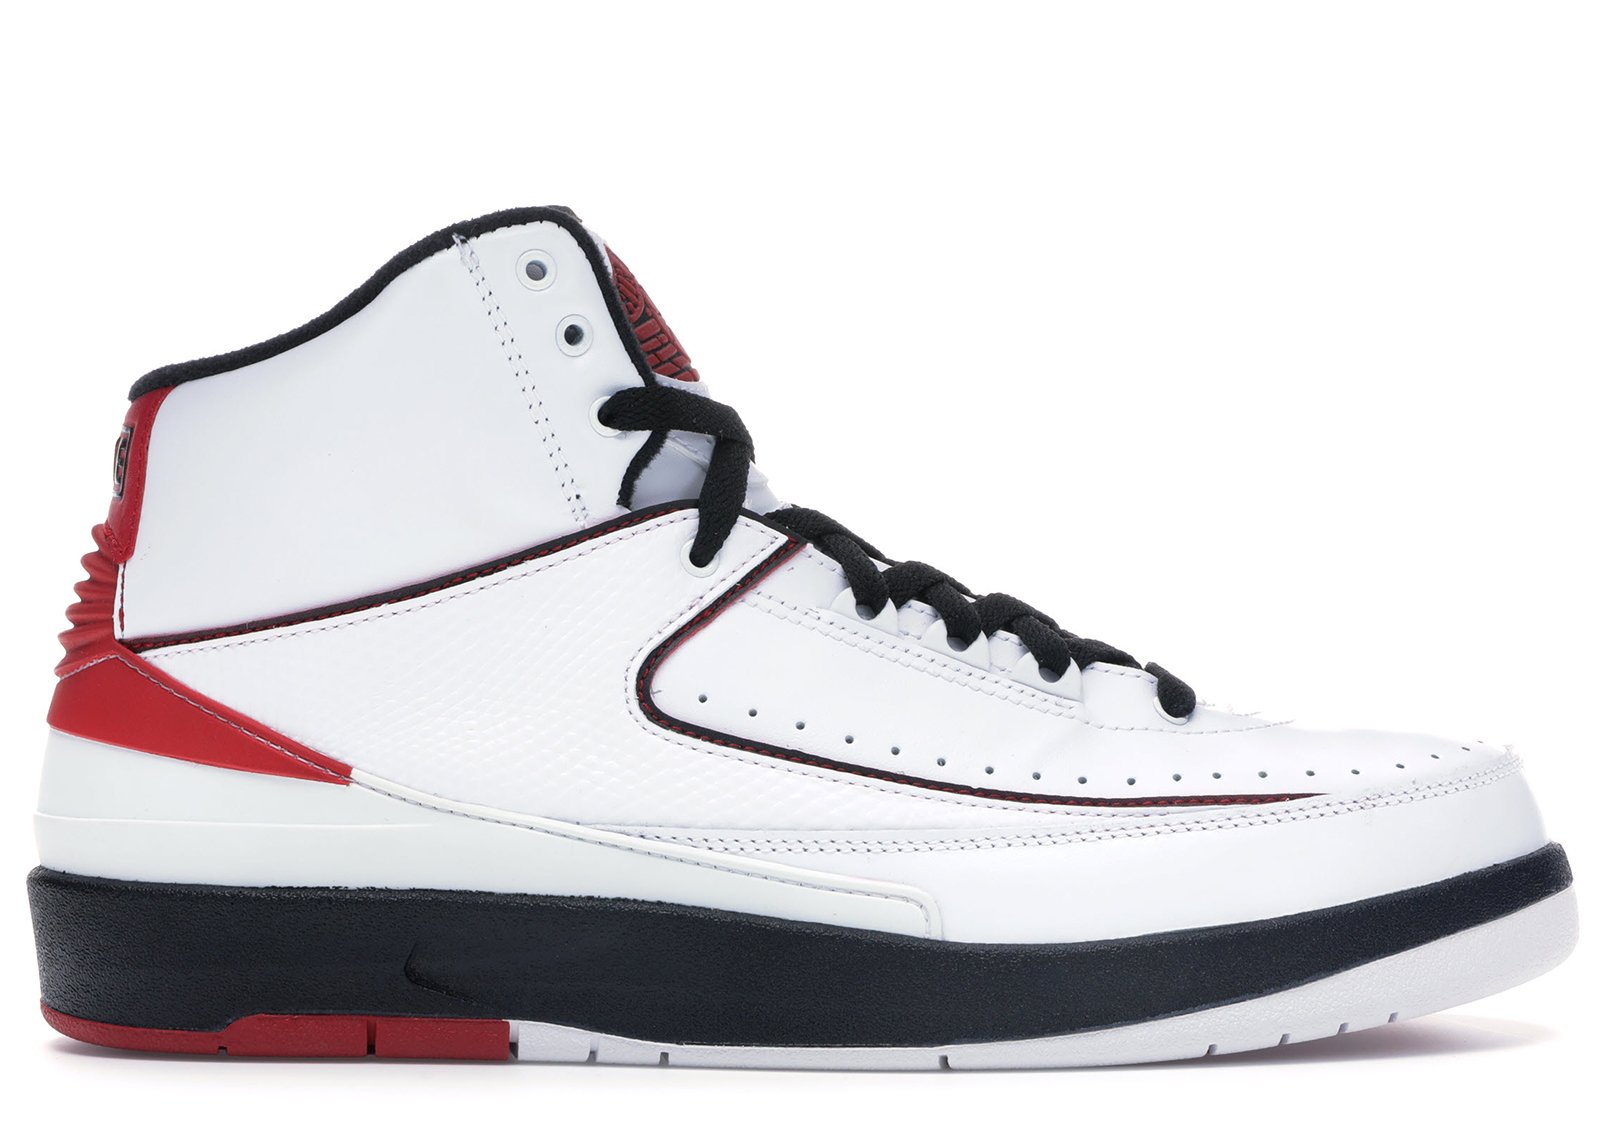 Jordan 2 Retro QF White Varsity Red (2010) sneakers